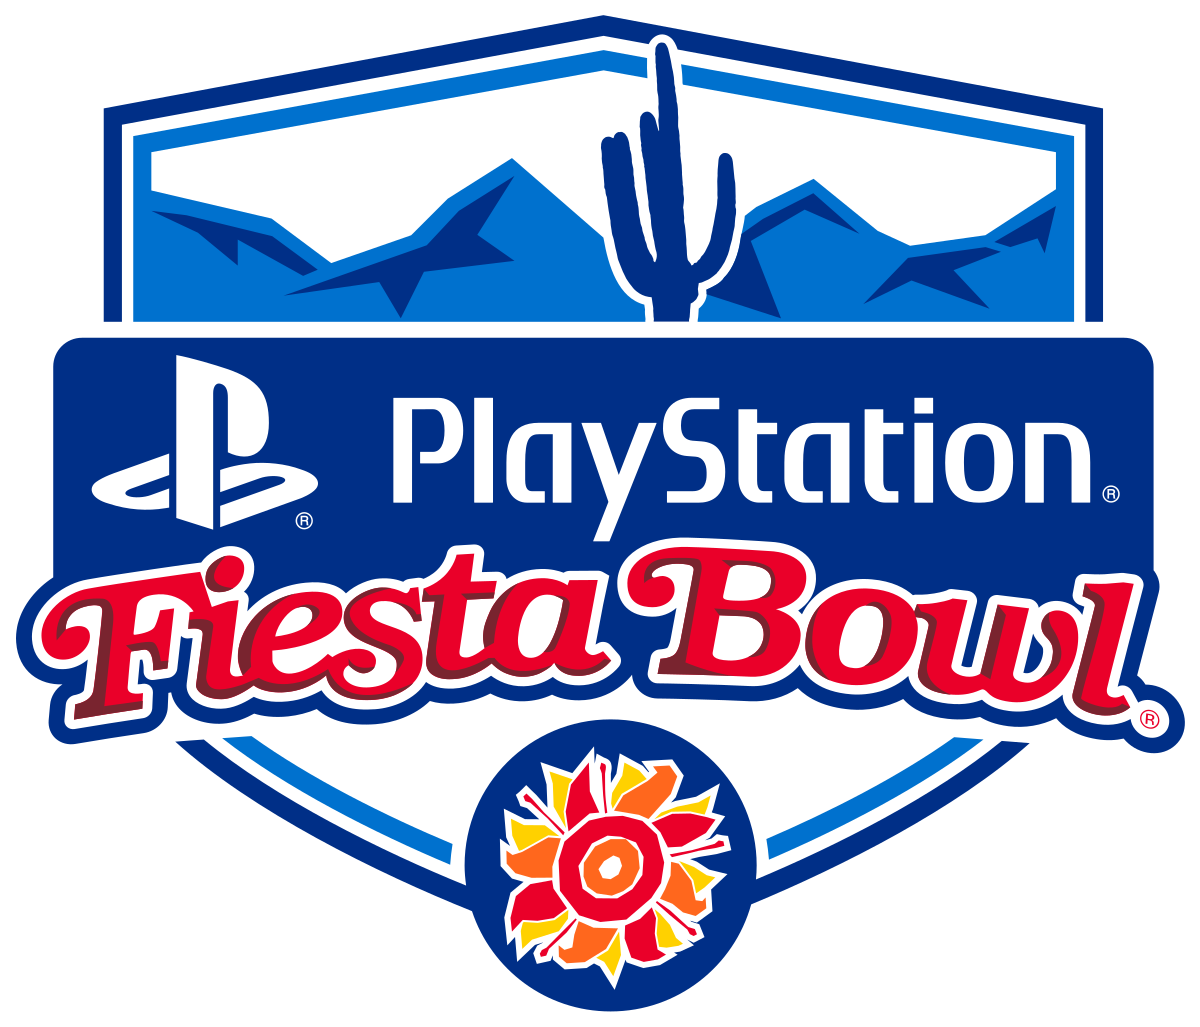 Fiesta Bowl 2019